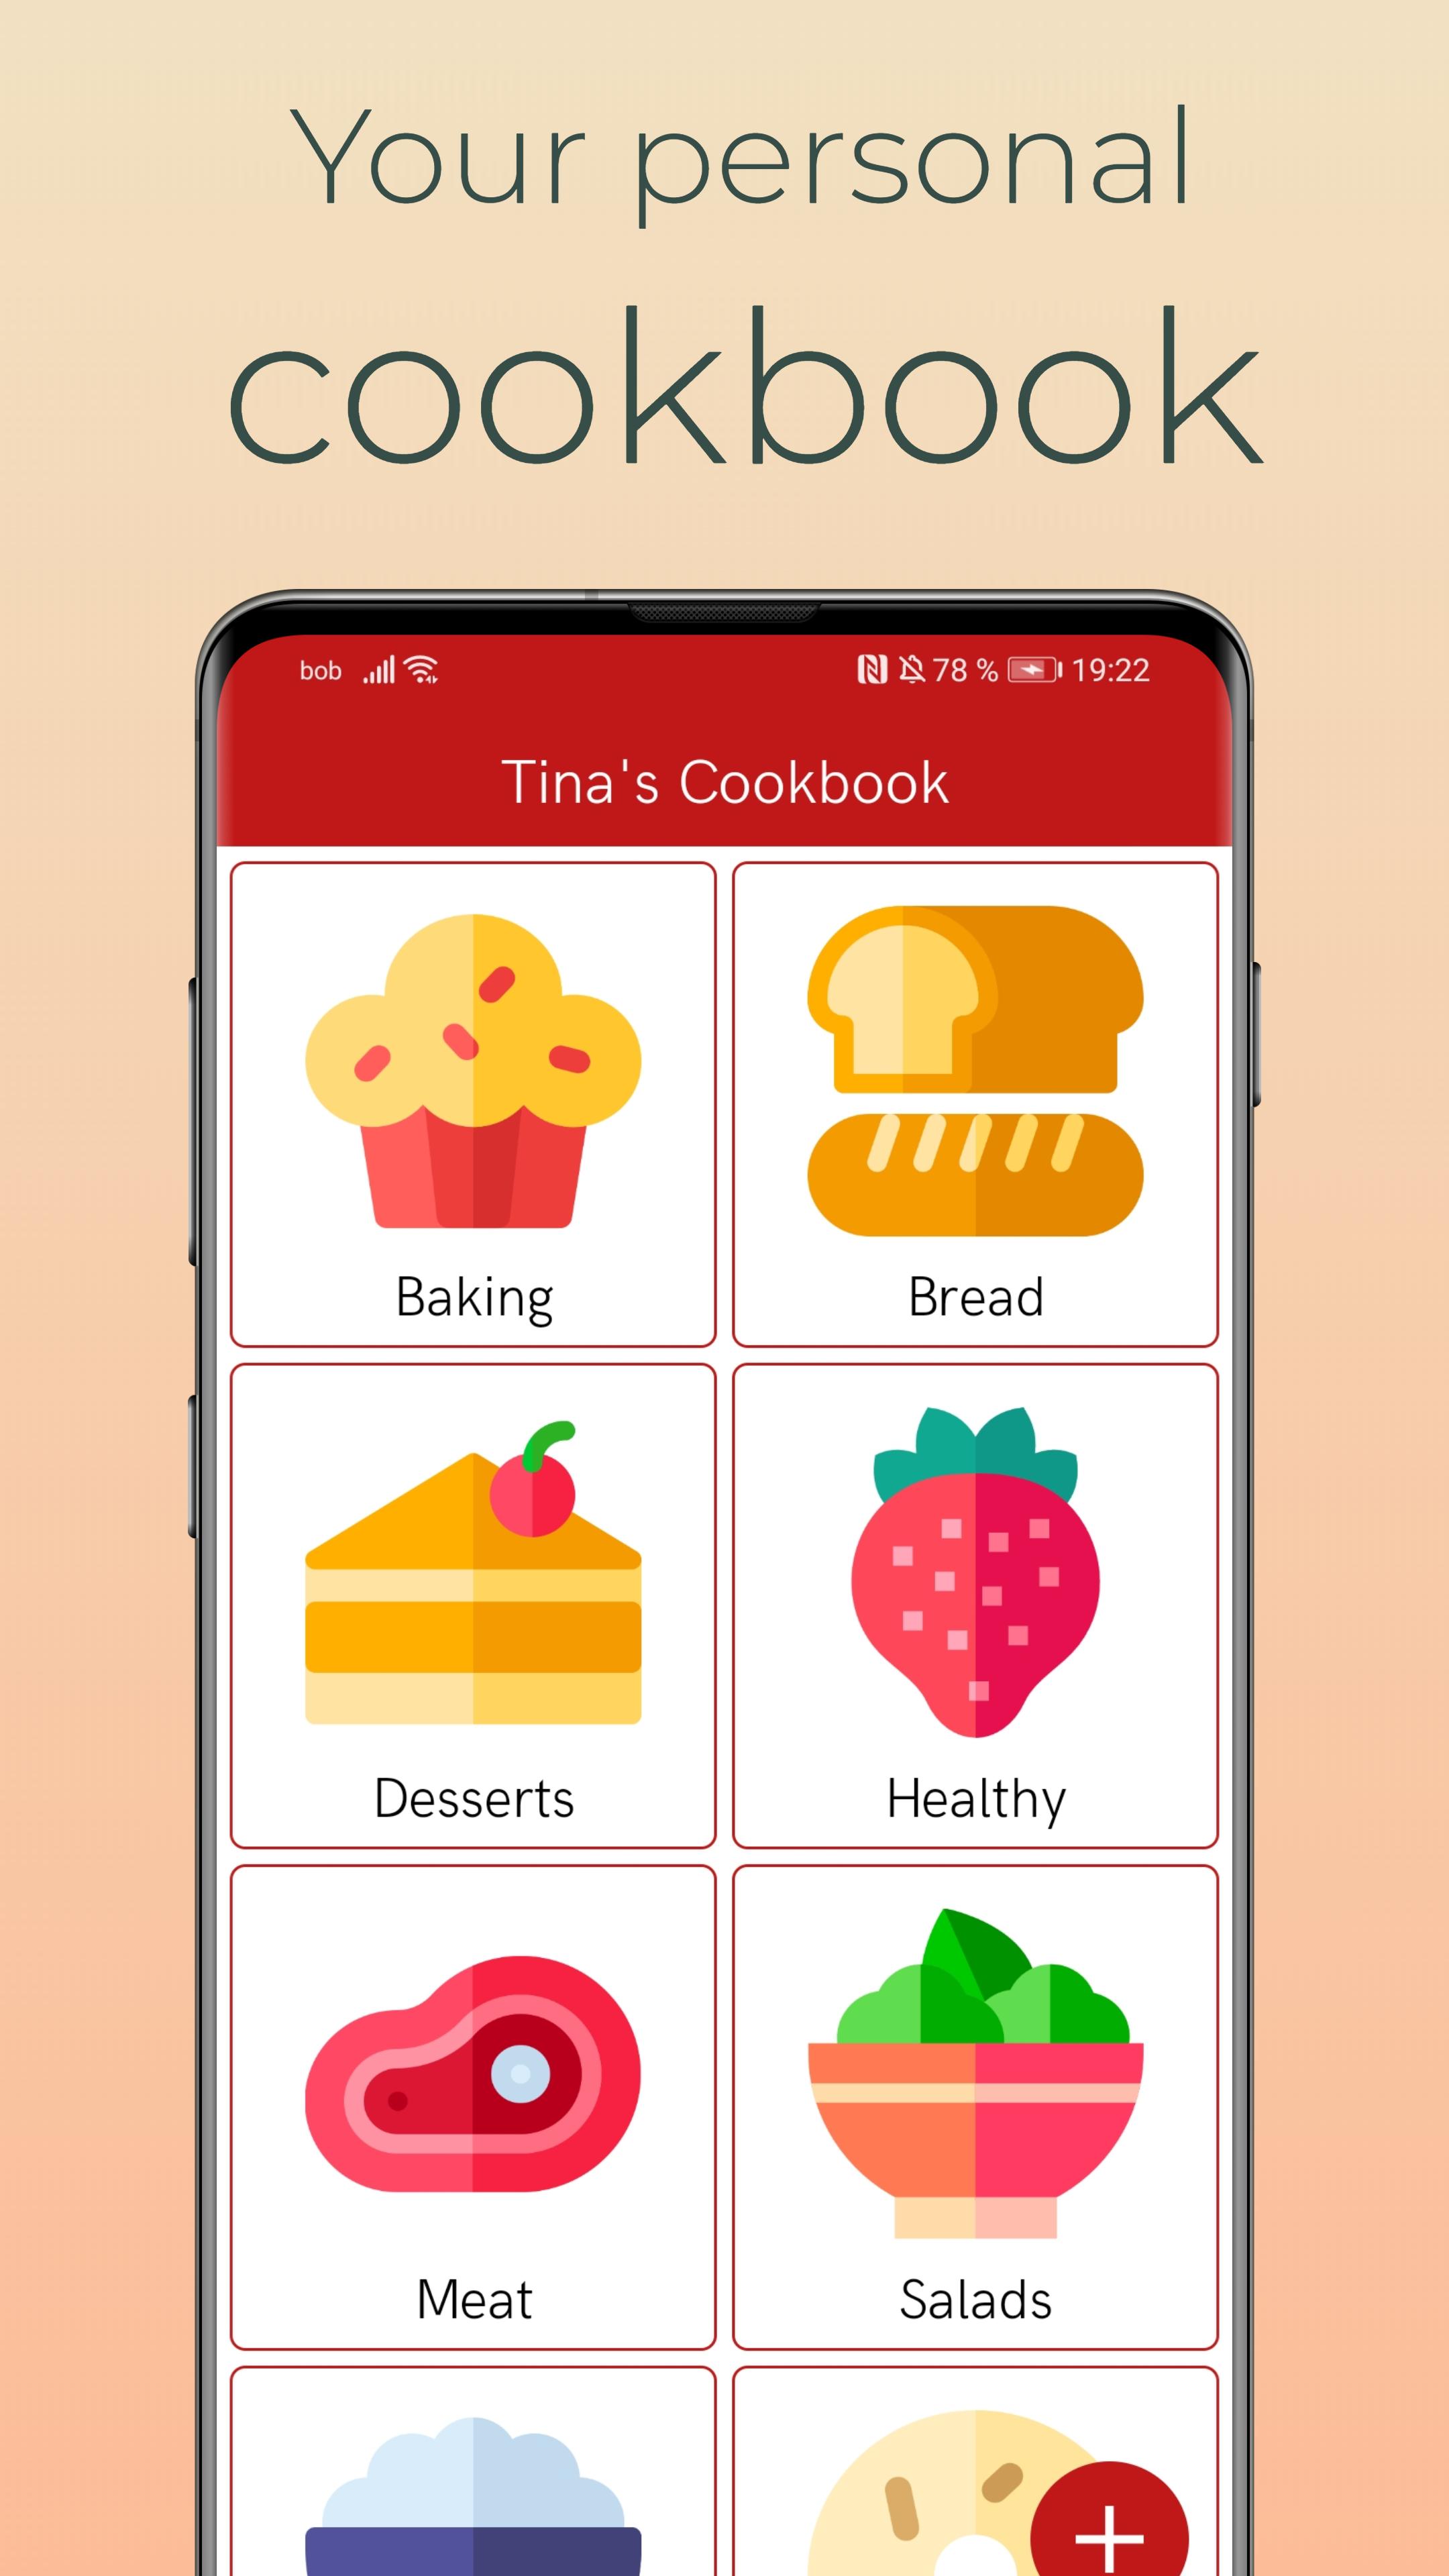 Android Studio Cookbook. My Cookbook. Create my Cookbook.